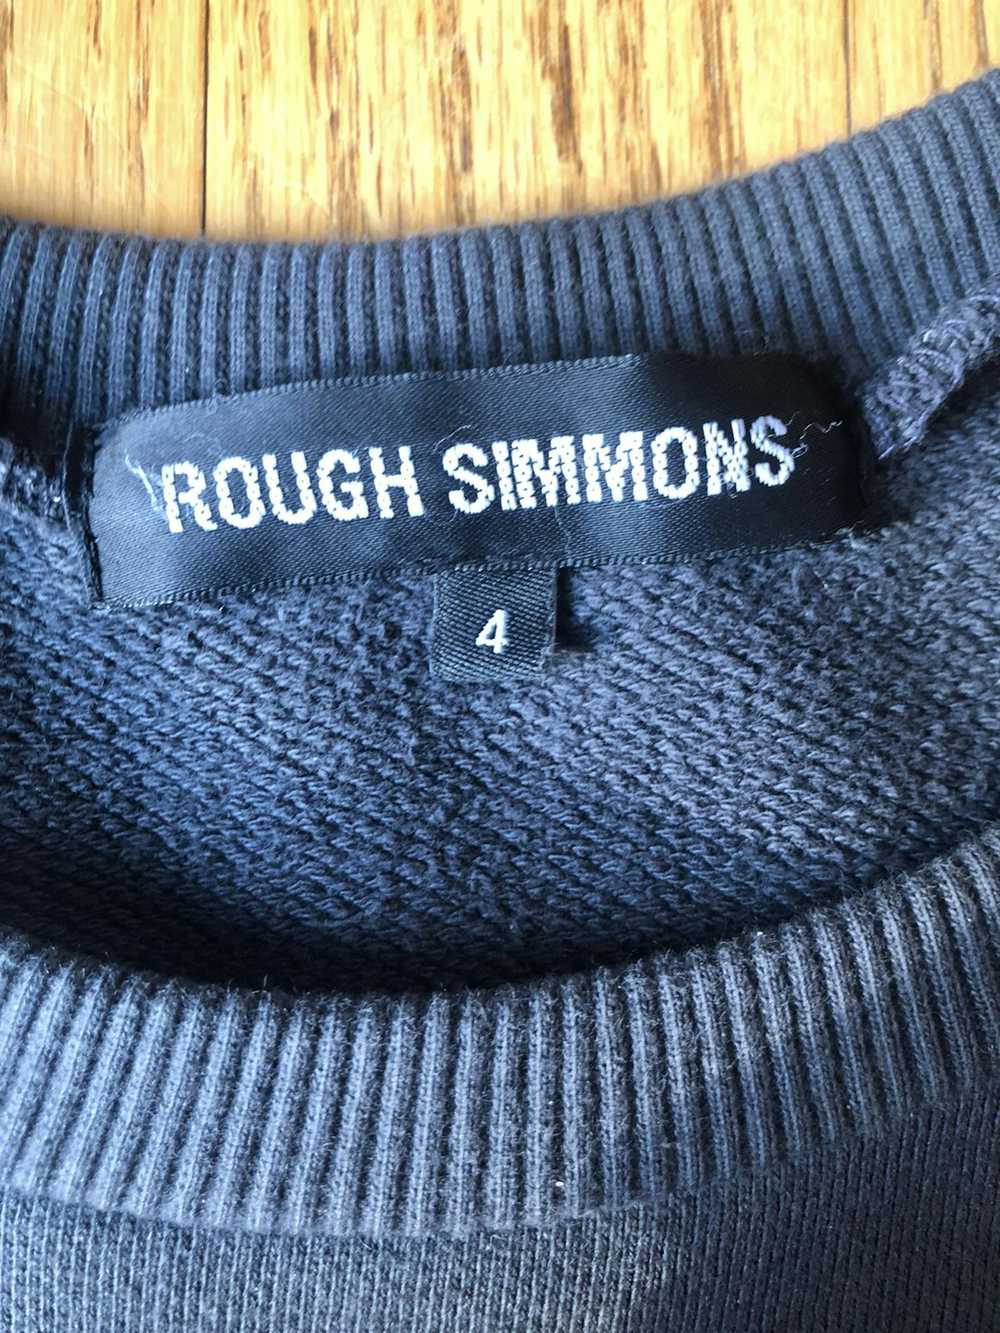 Rough Simmons Neotokyo Sweater 4 - image 4